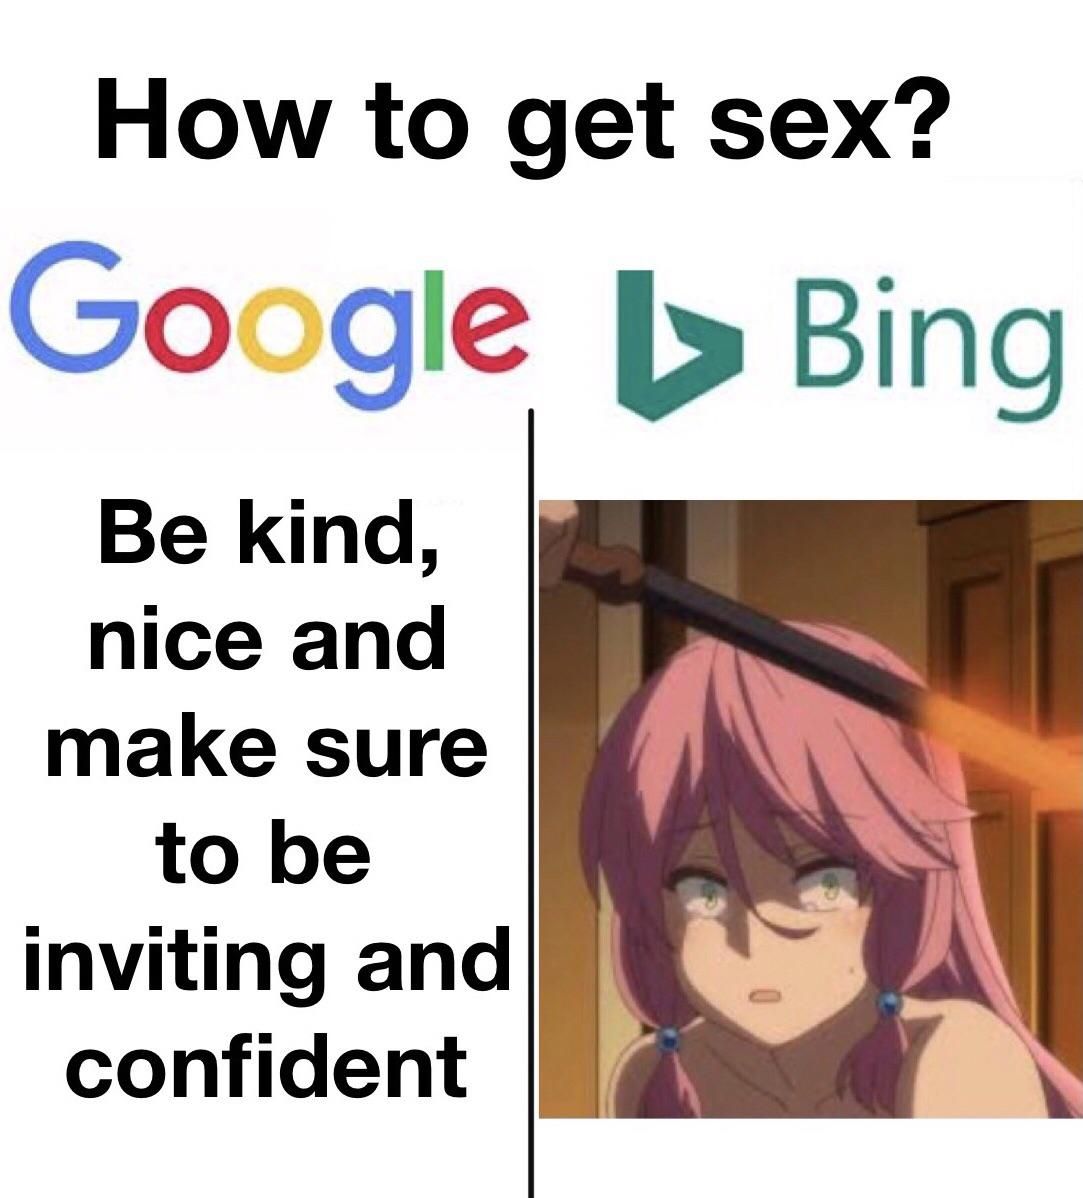 Bing are men of culture